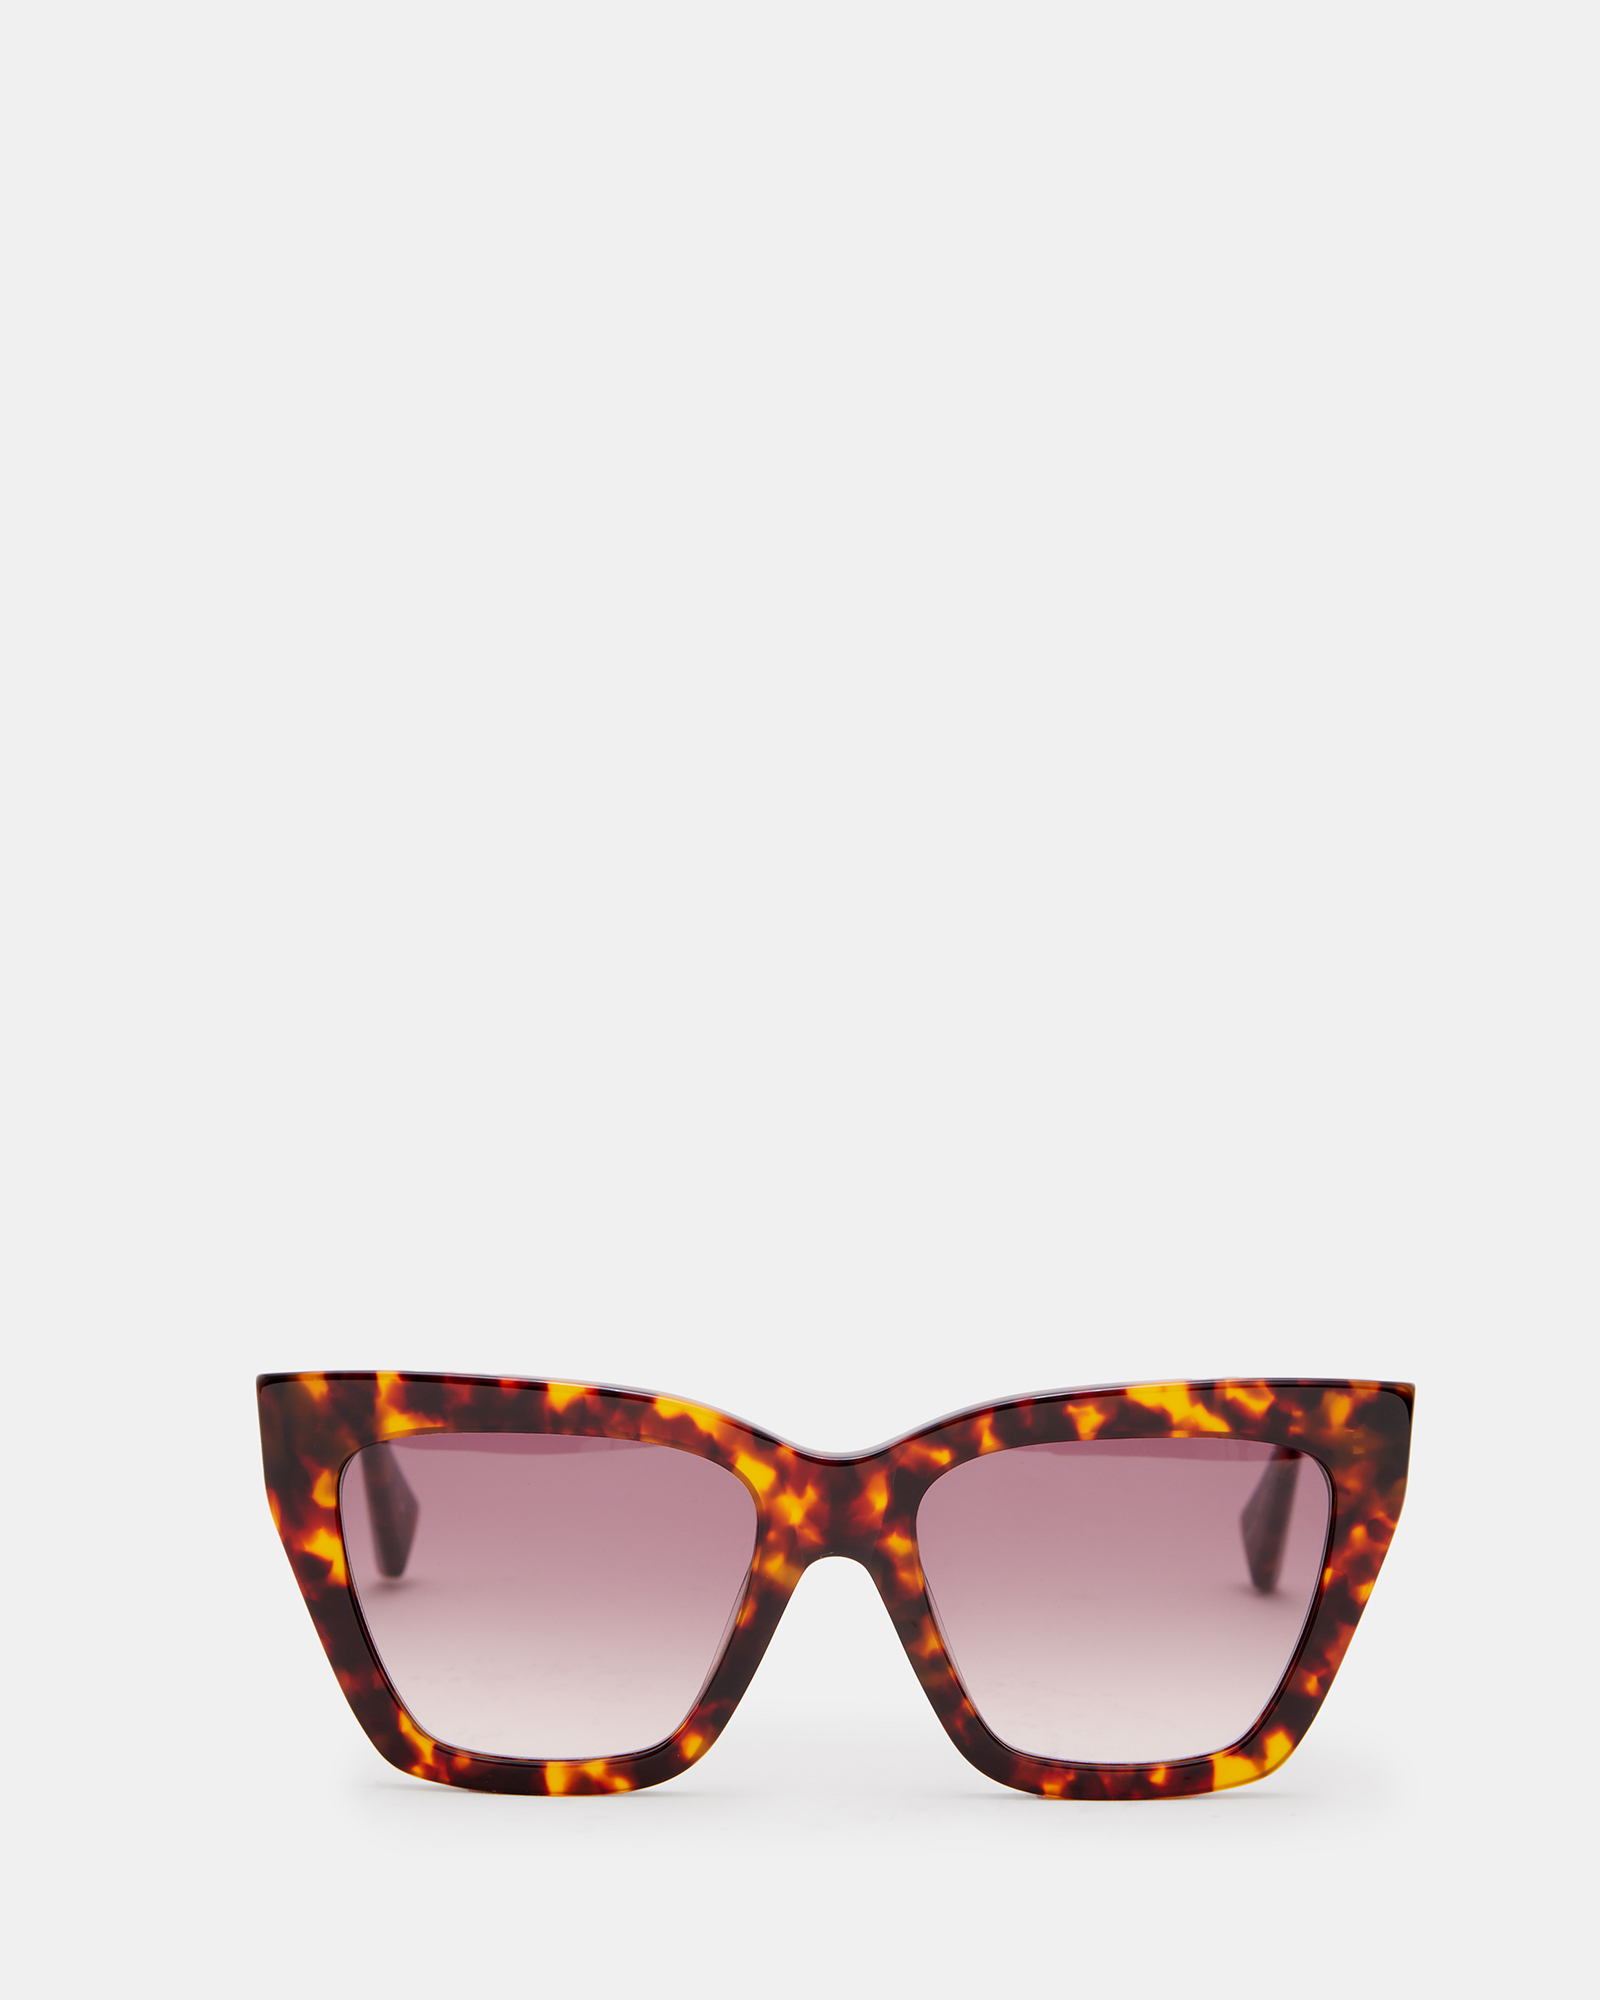 AllSaints Minerva Square Cat Eye Sunglasses,, CLASSIC TORT